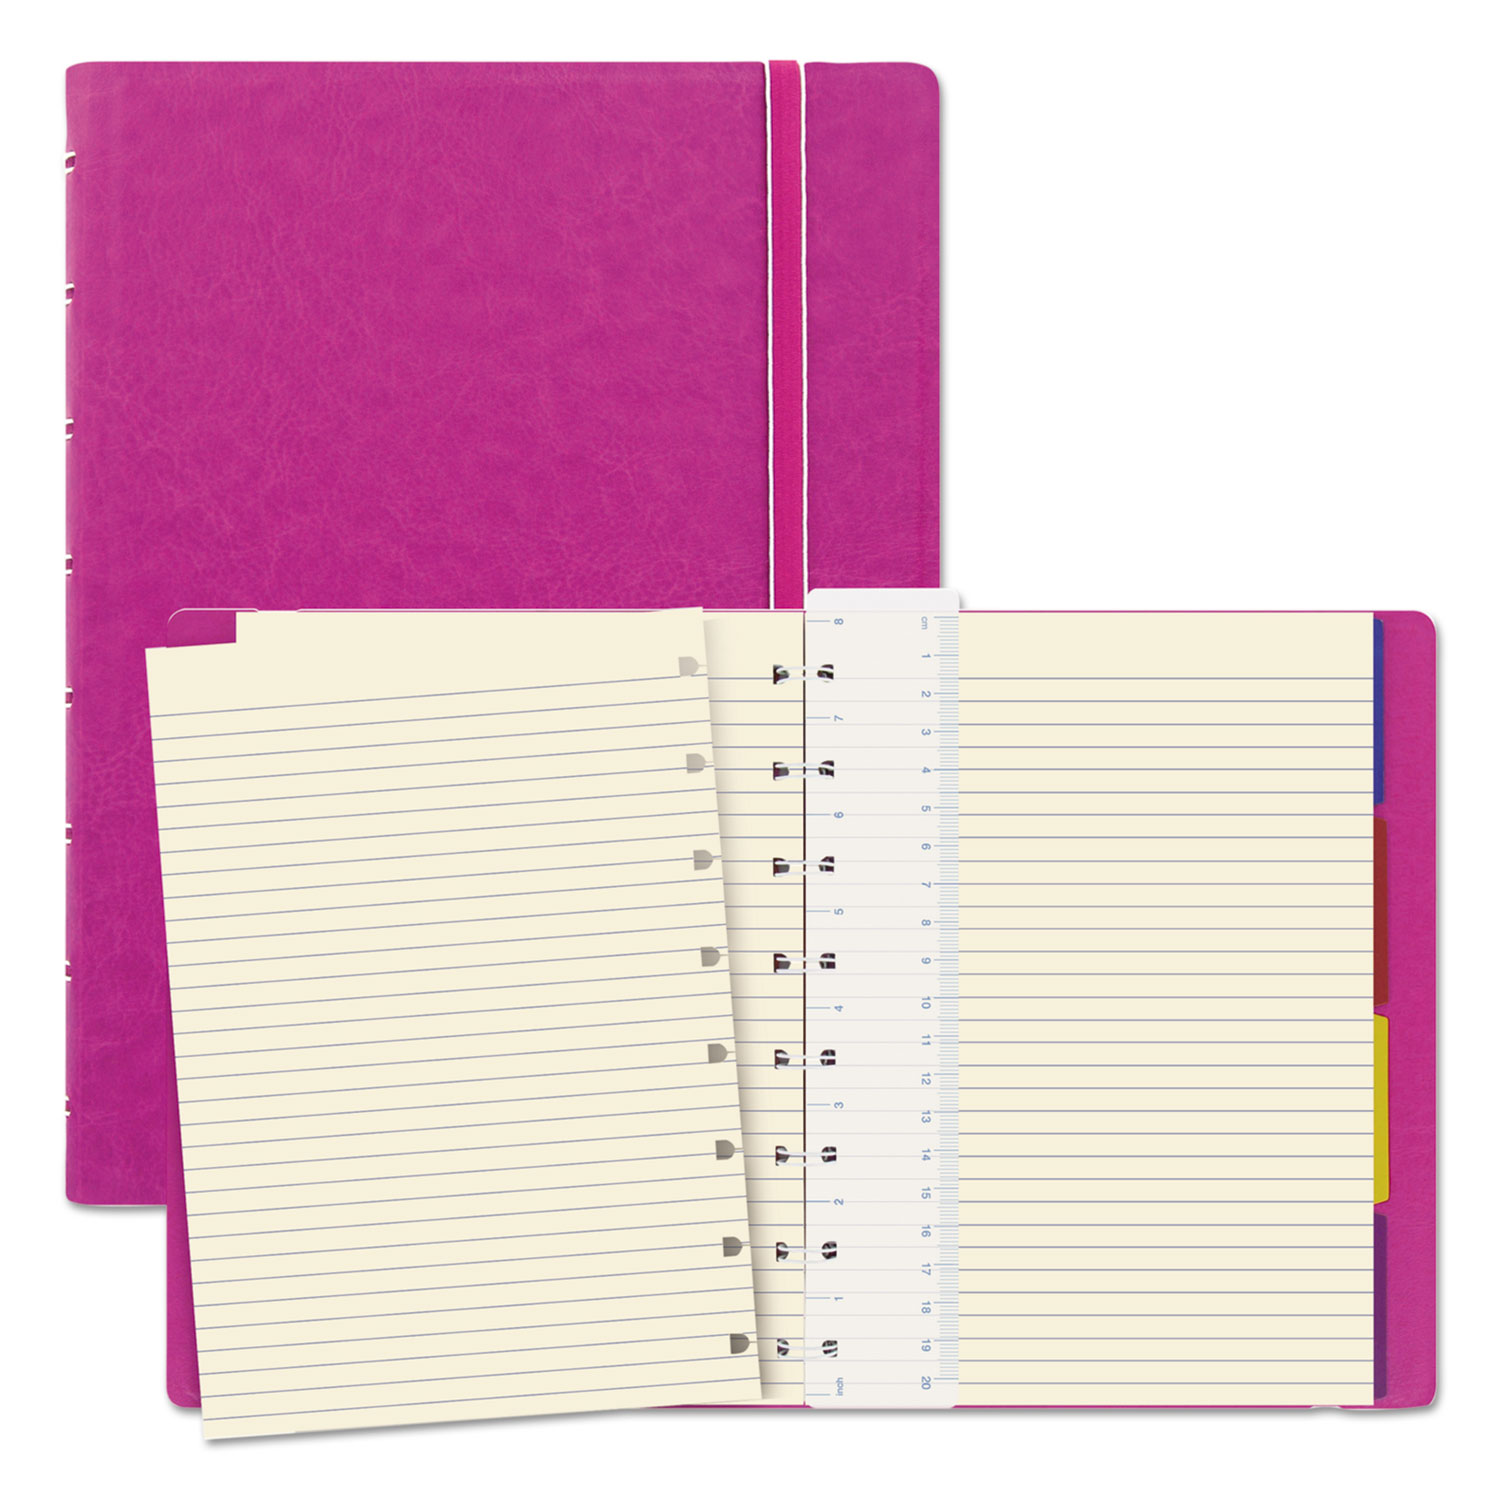  Filofax B115011U Notebook, 1 Subject, Medium/College Rule, Fuchsia Cover, 8.25 x 5.81, 112 Sheets (REDB115011U) 